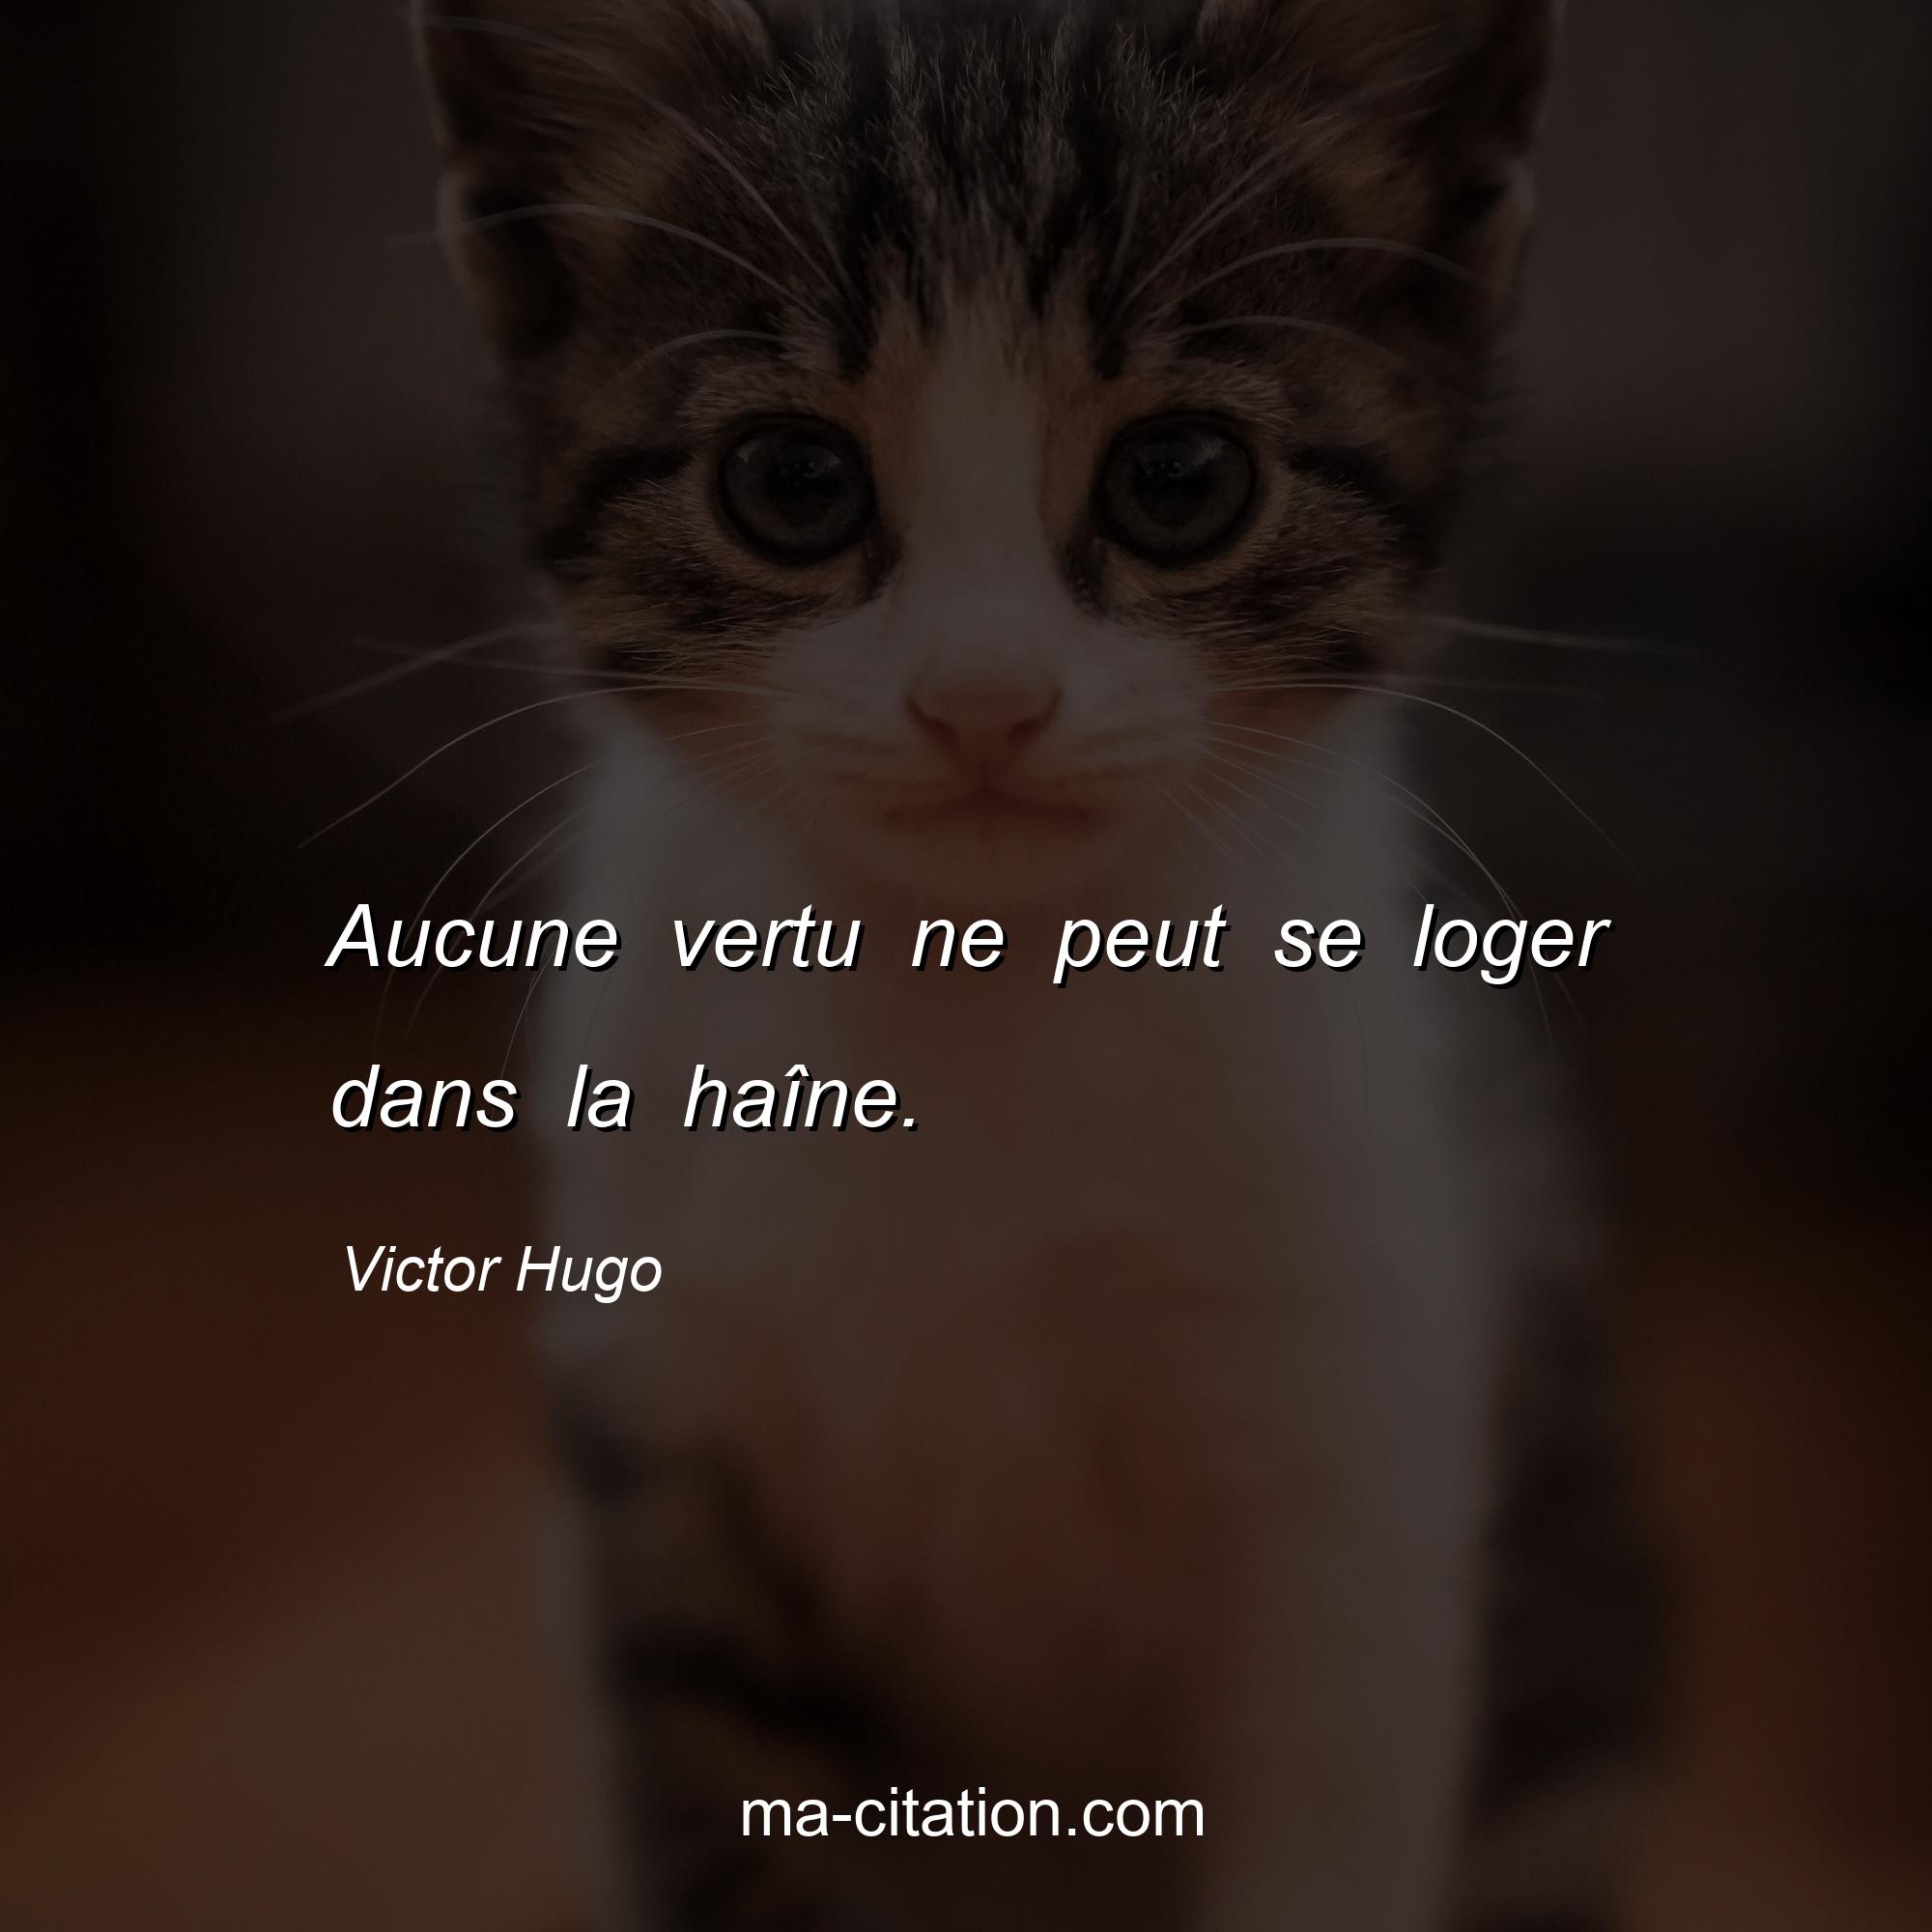 Victor Hugo : Aucune vertu ne peut se loger dans la haîne.